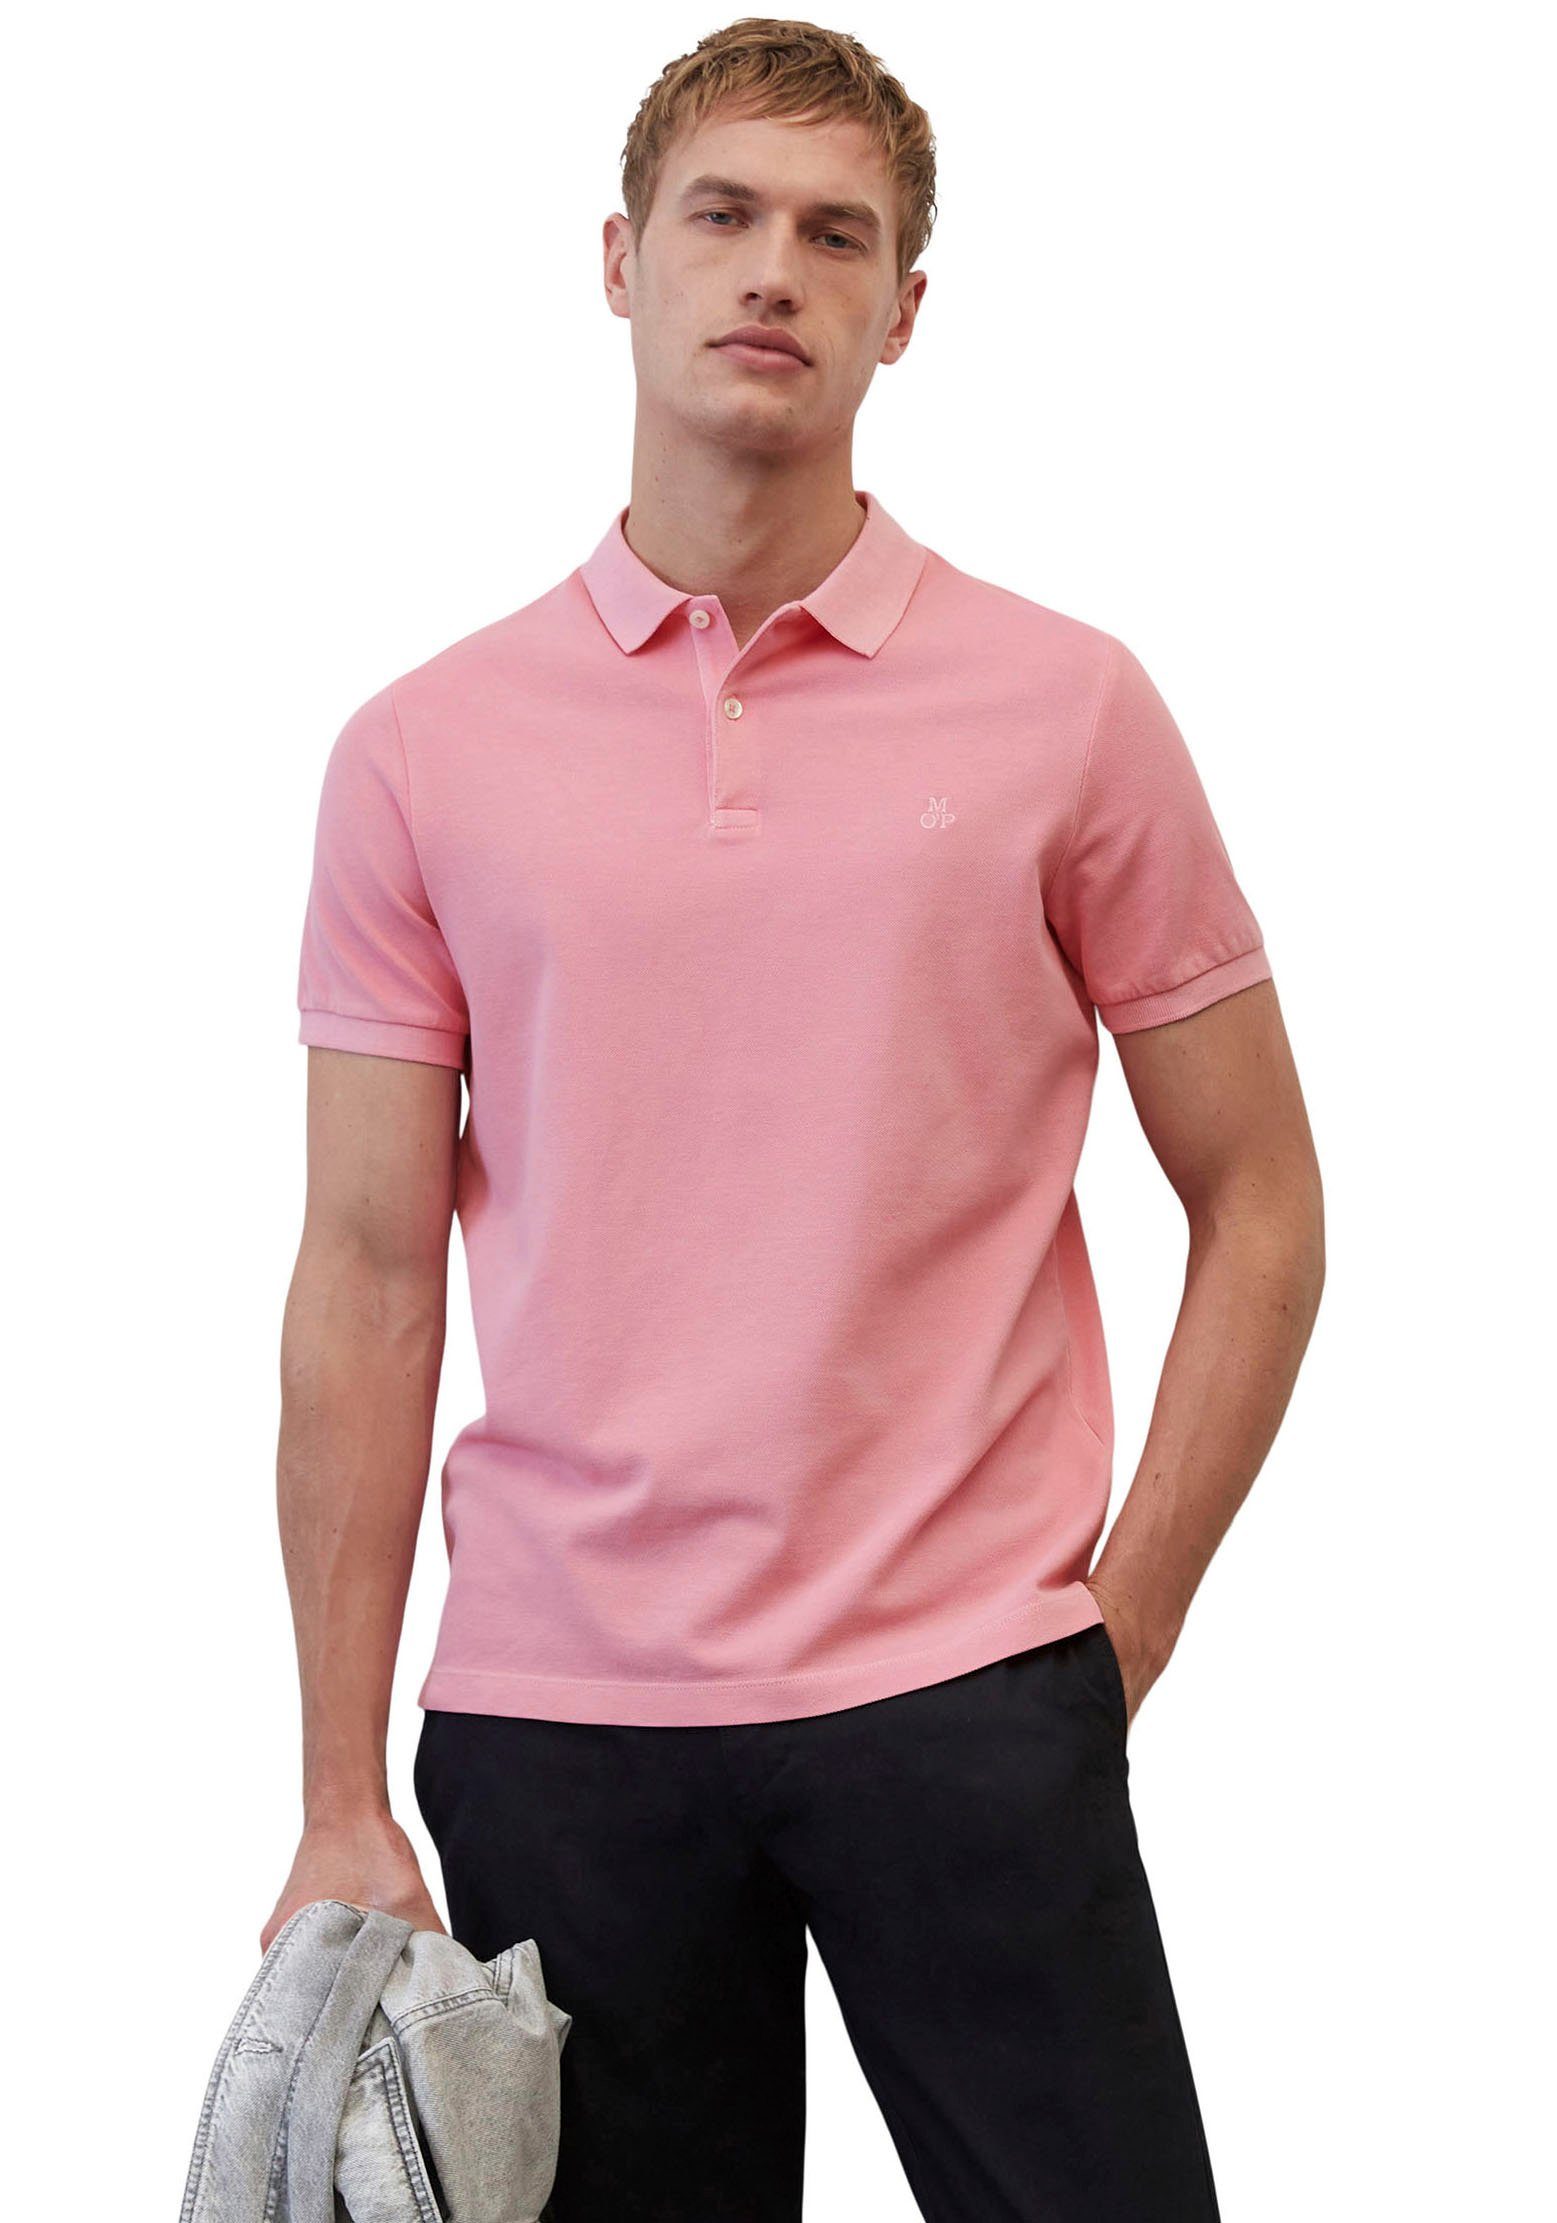 Trends Marc O'Polo Poloshirt im pink klassischen Look